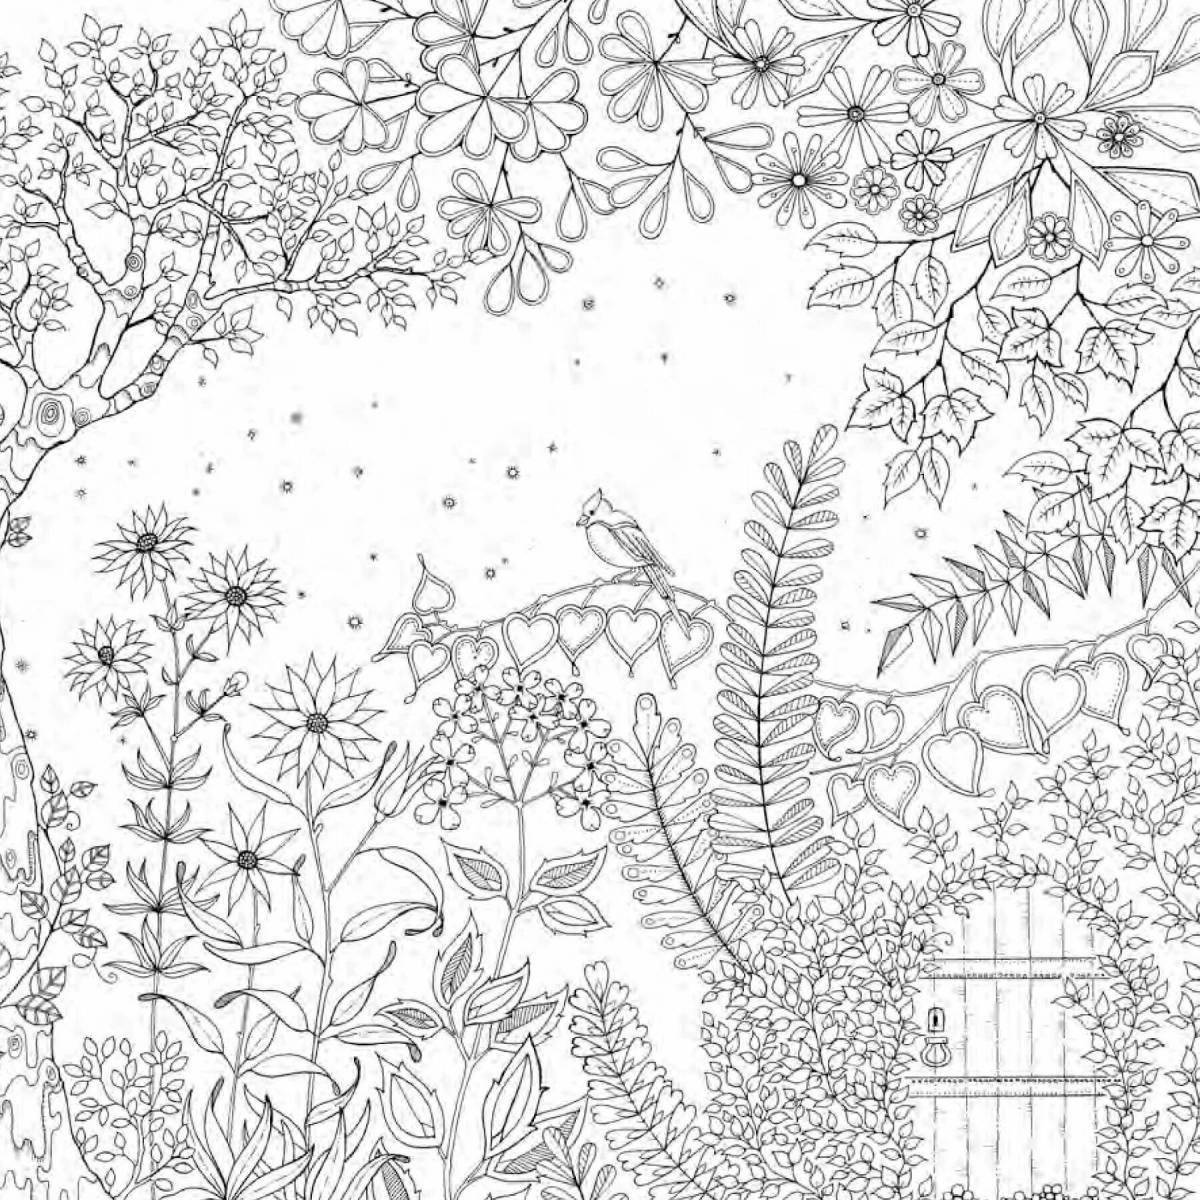 Exquisite coloring joanna basford secret garden